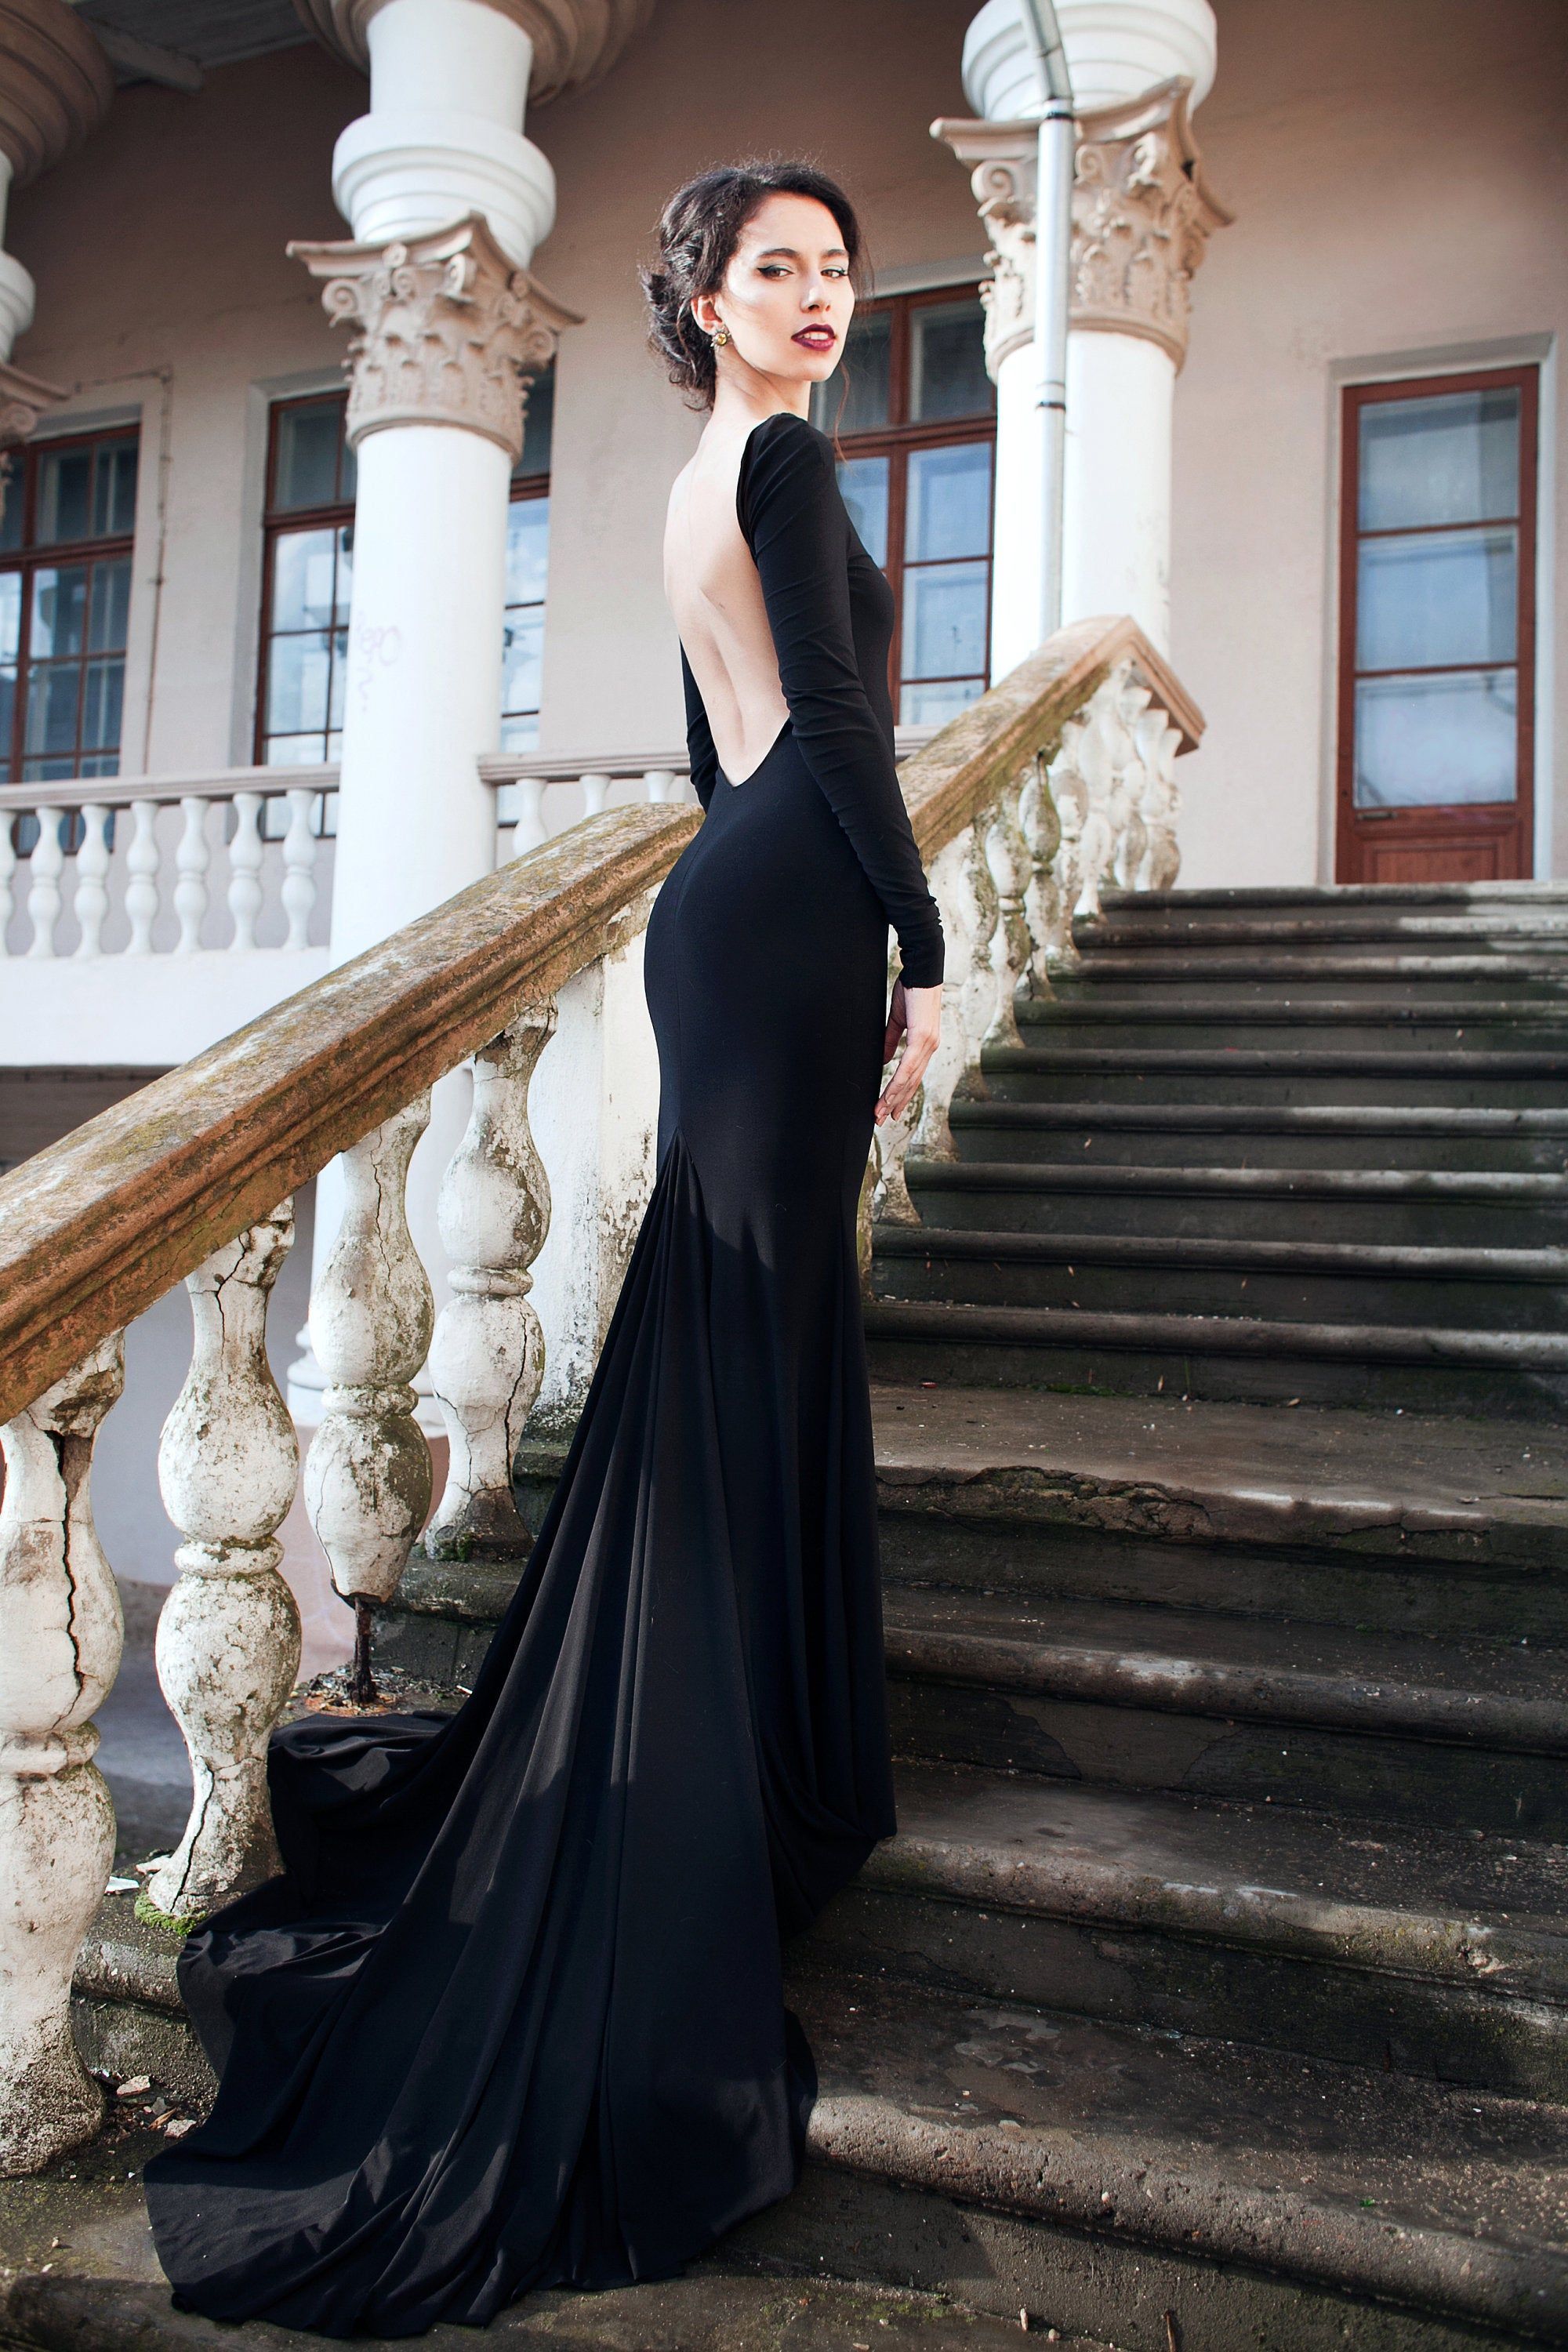 Evening and wedding mimimalist simple dress, Bridesmaid dress with sleeve, long train -   17 dress Black evening ideas